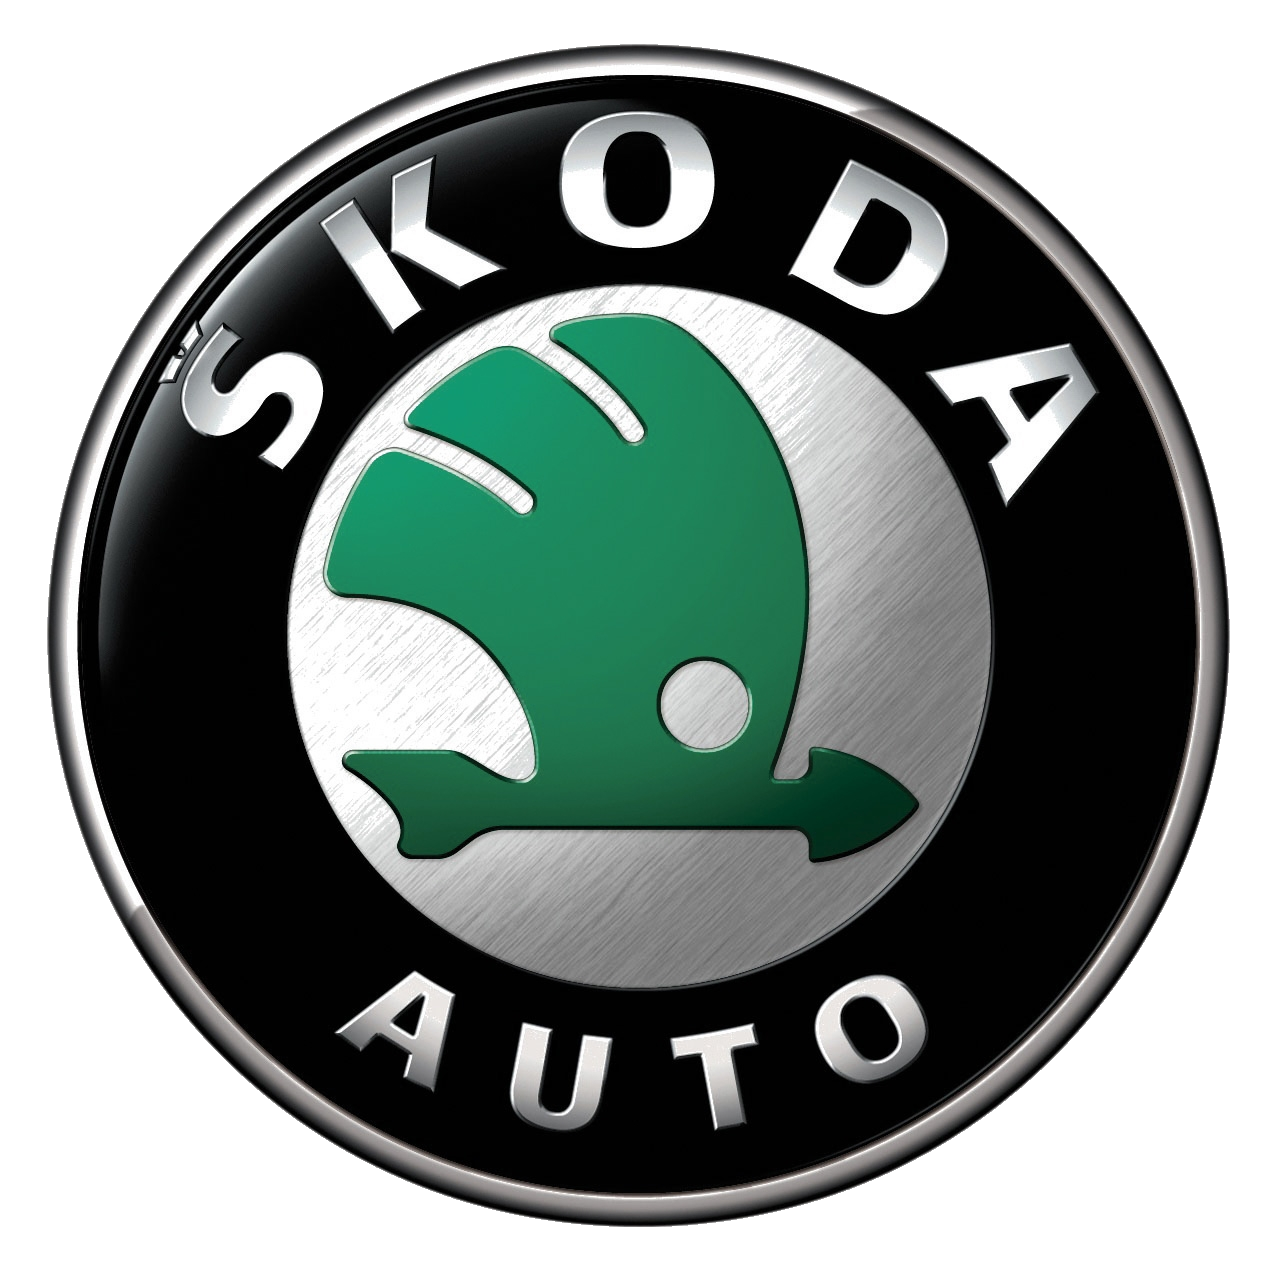 Logotipo da Skoda